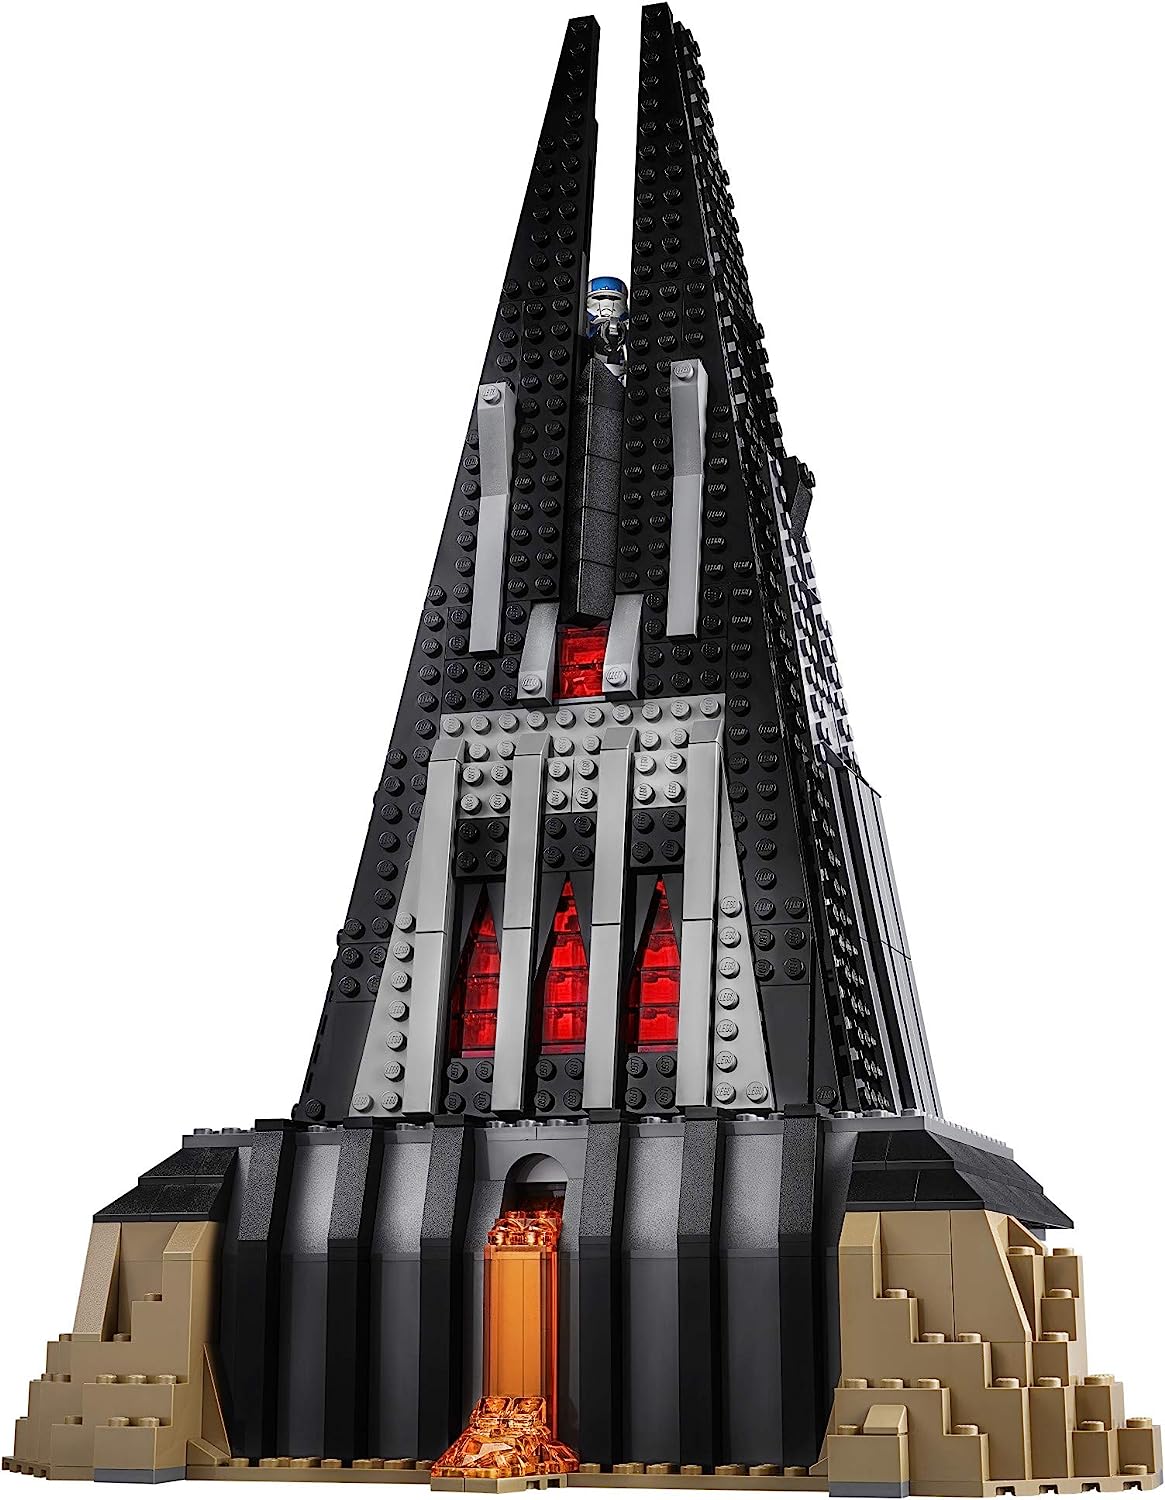 NEW LEGO STAR WARS DARTH VADER MINIFIG Bacta Tank figure minifigure 75251 castle